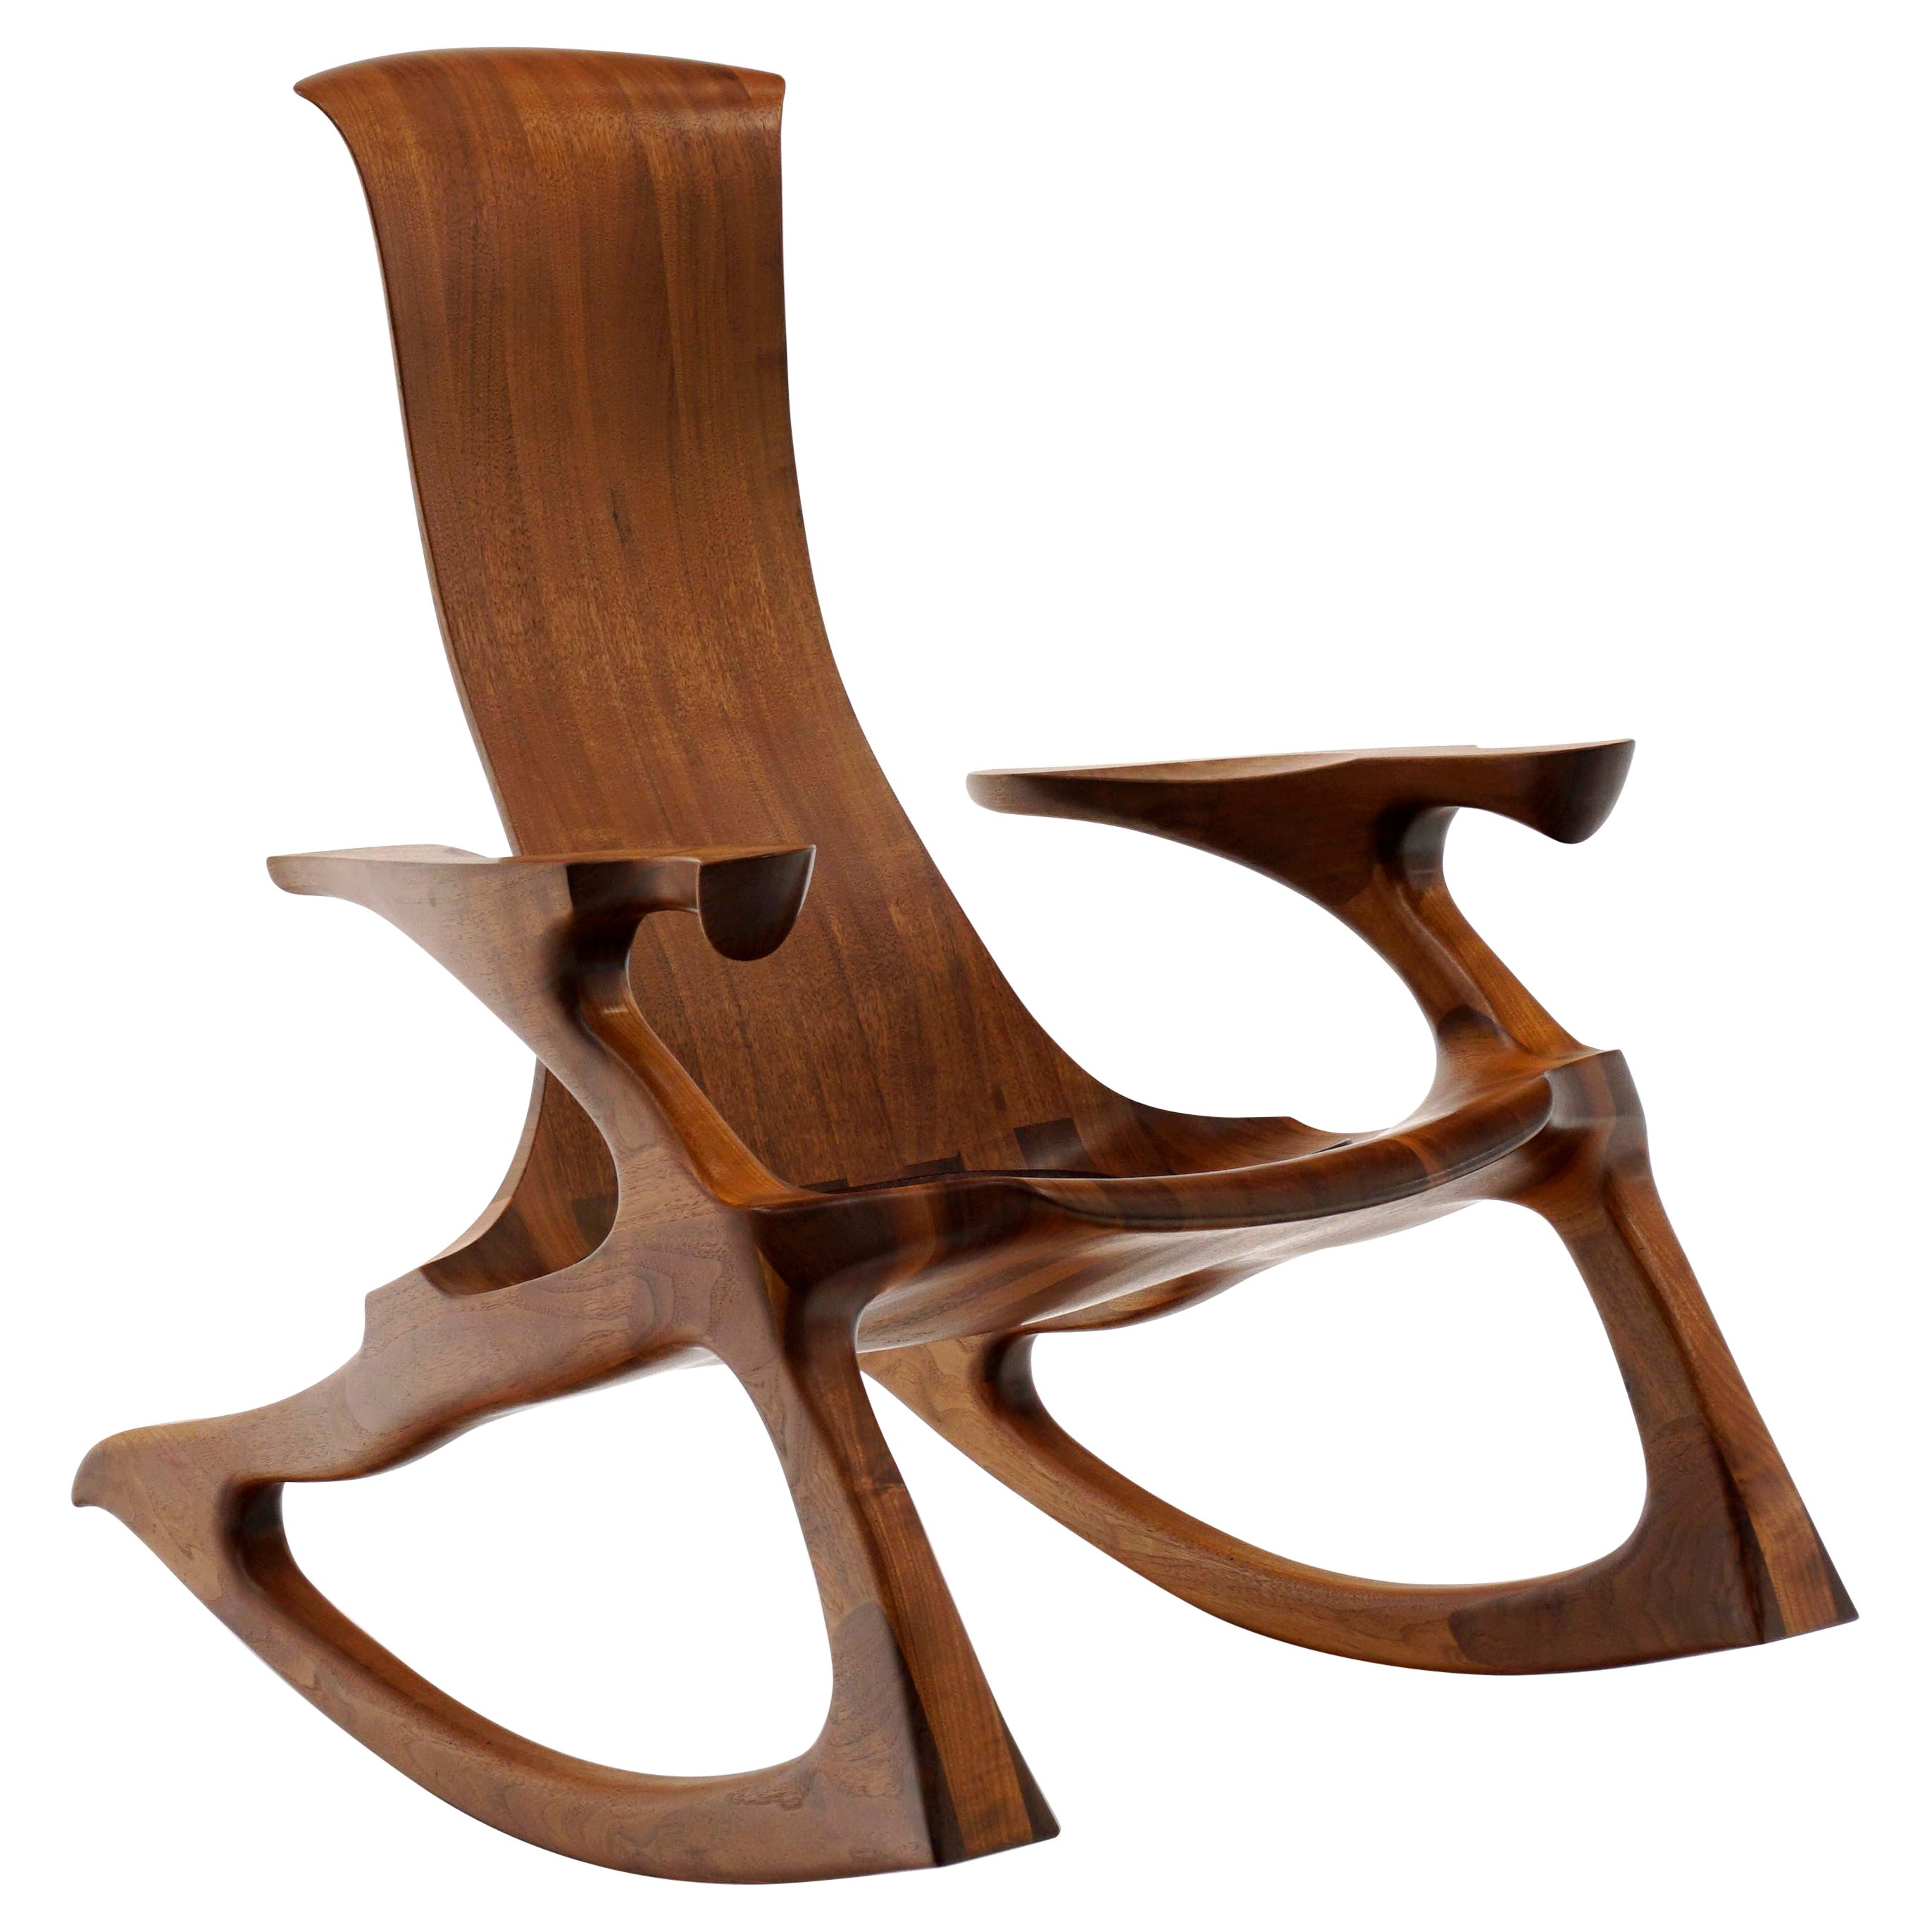 American Studio Craft Sculptural Walnut Rocking Chair, Hand Crafted, Marked